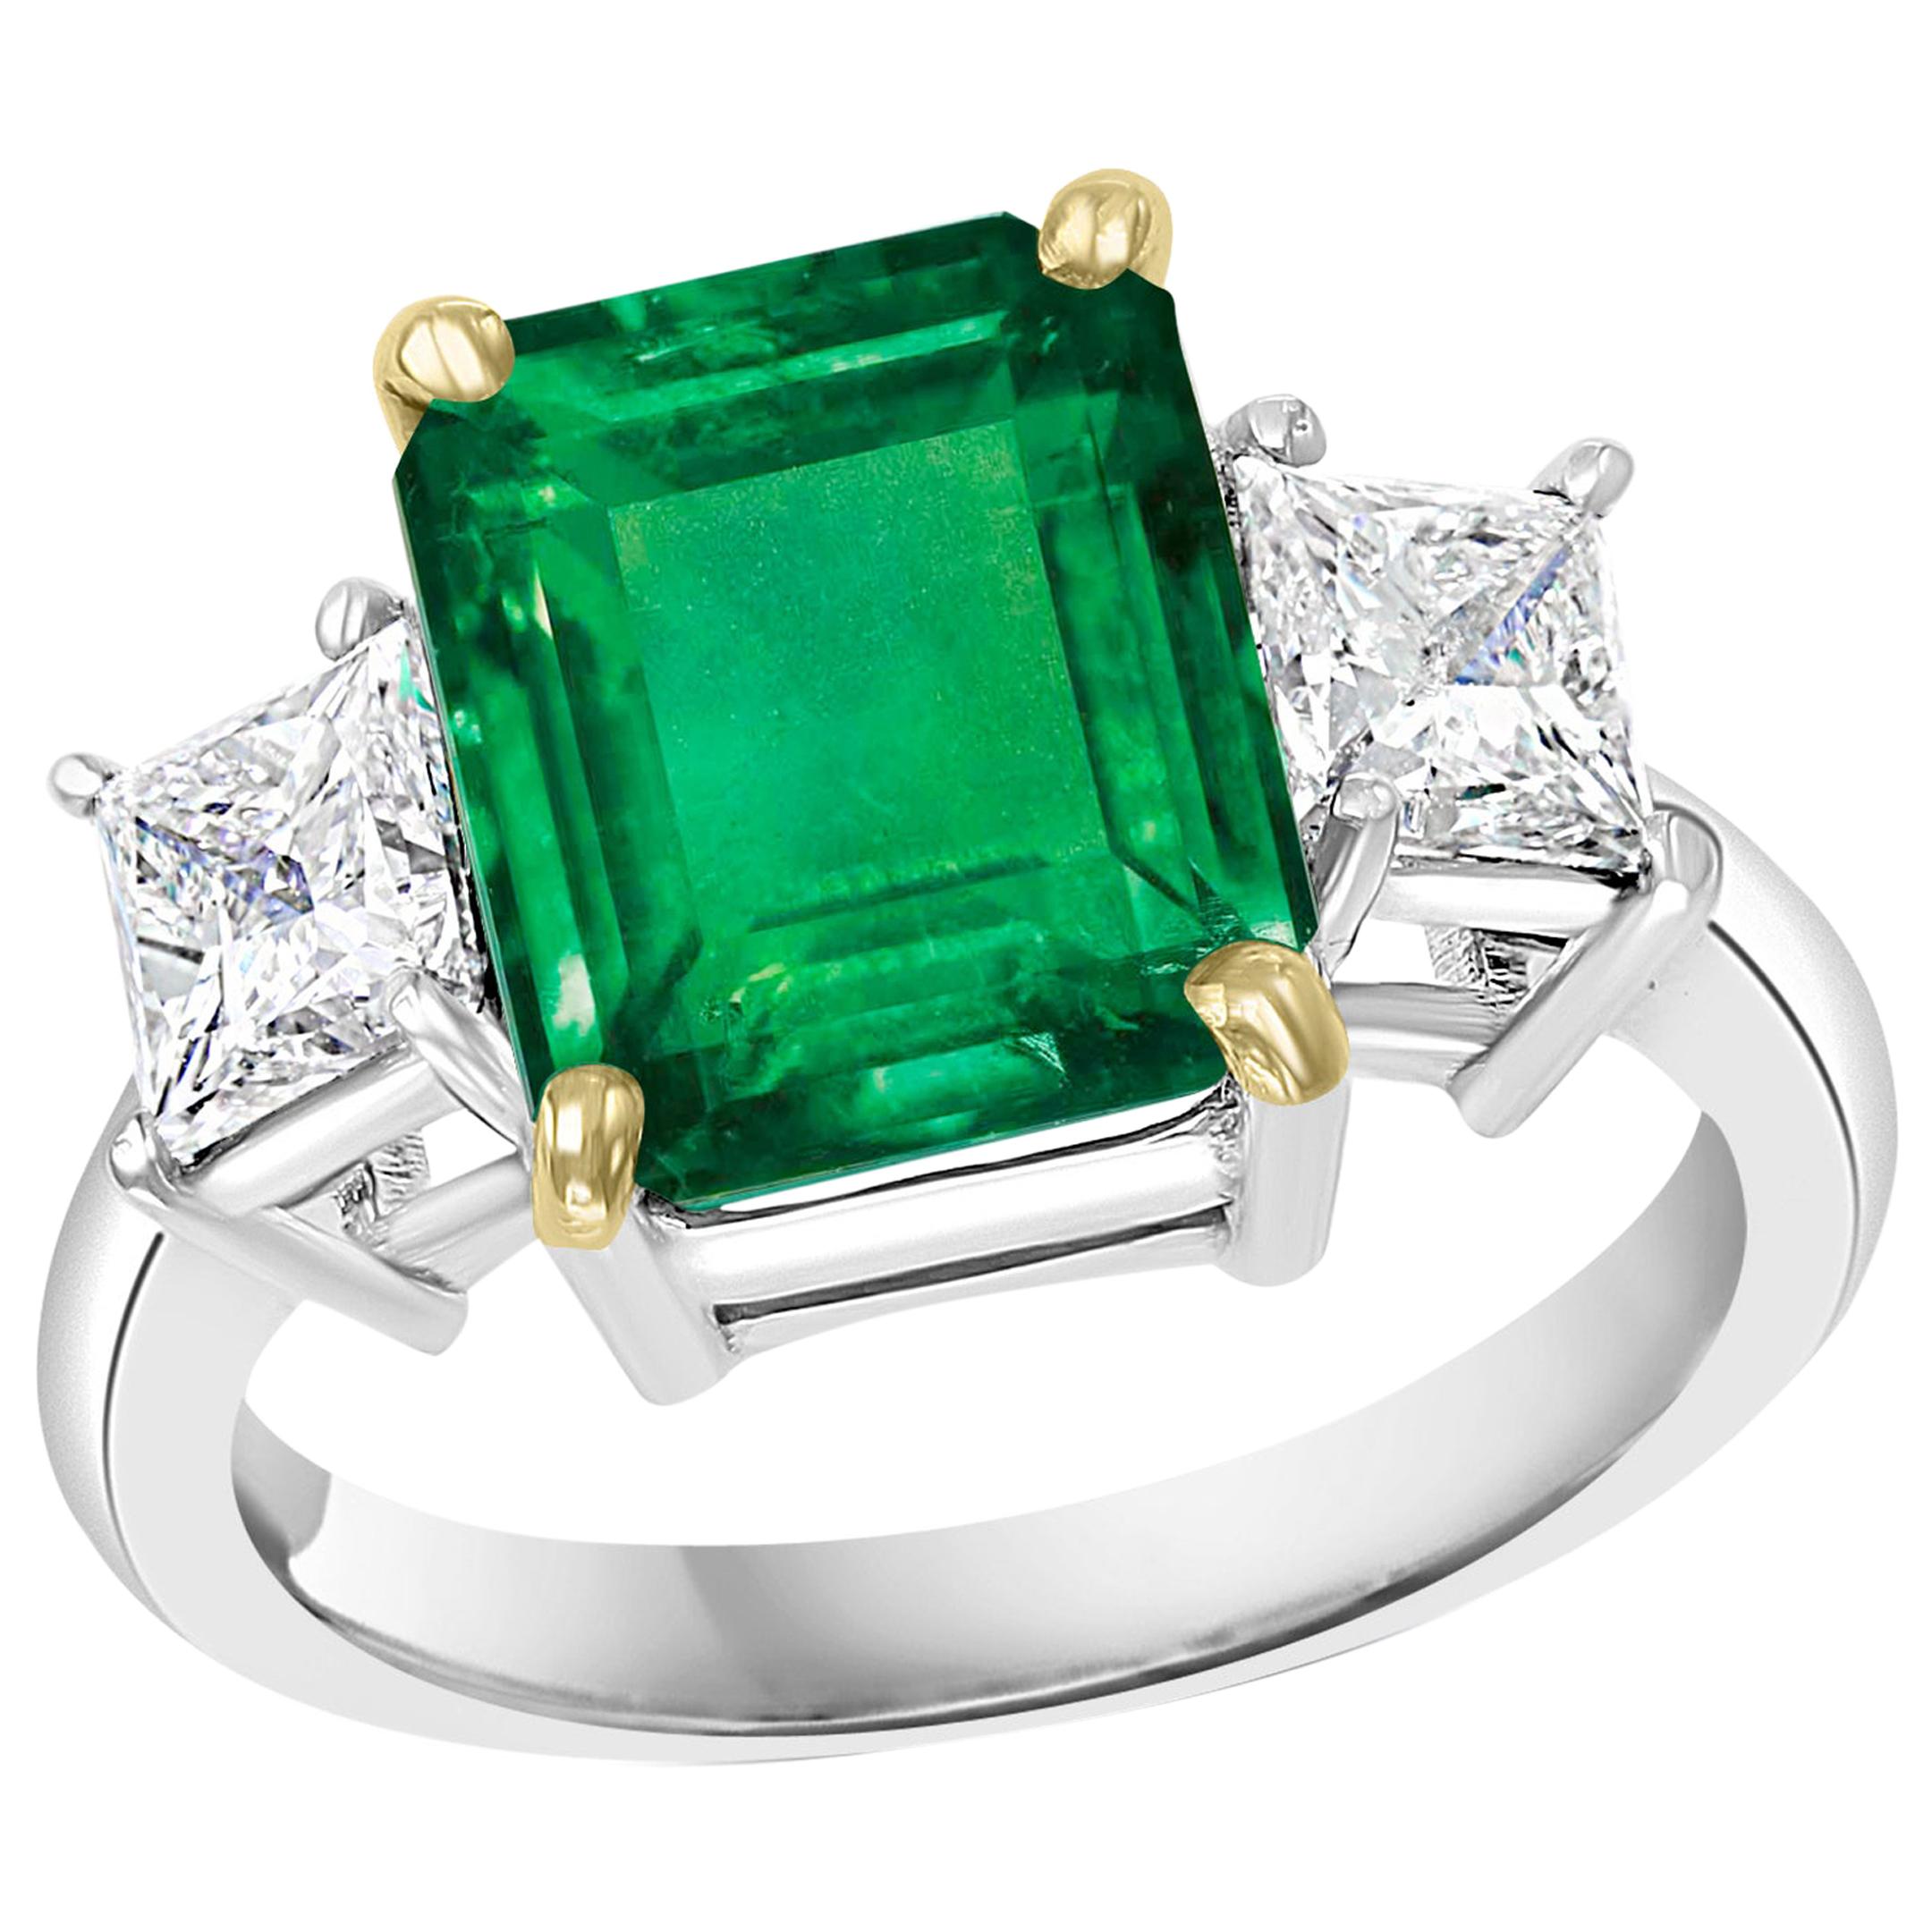 4.5 Carat Emerald Cut Colombian Emerald and 1.4 Carat Diamond 18 Karat Gold Ring For Sale